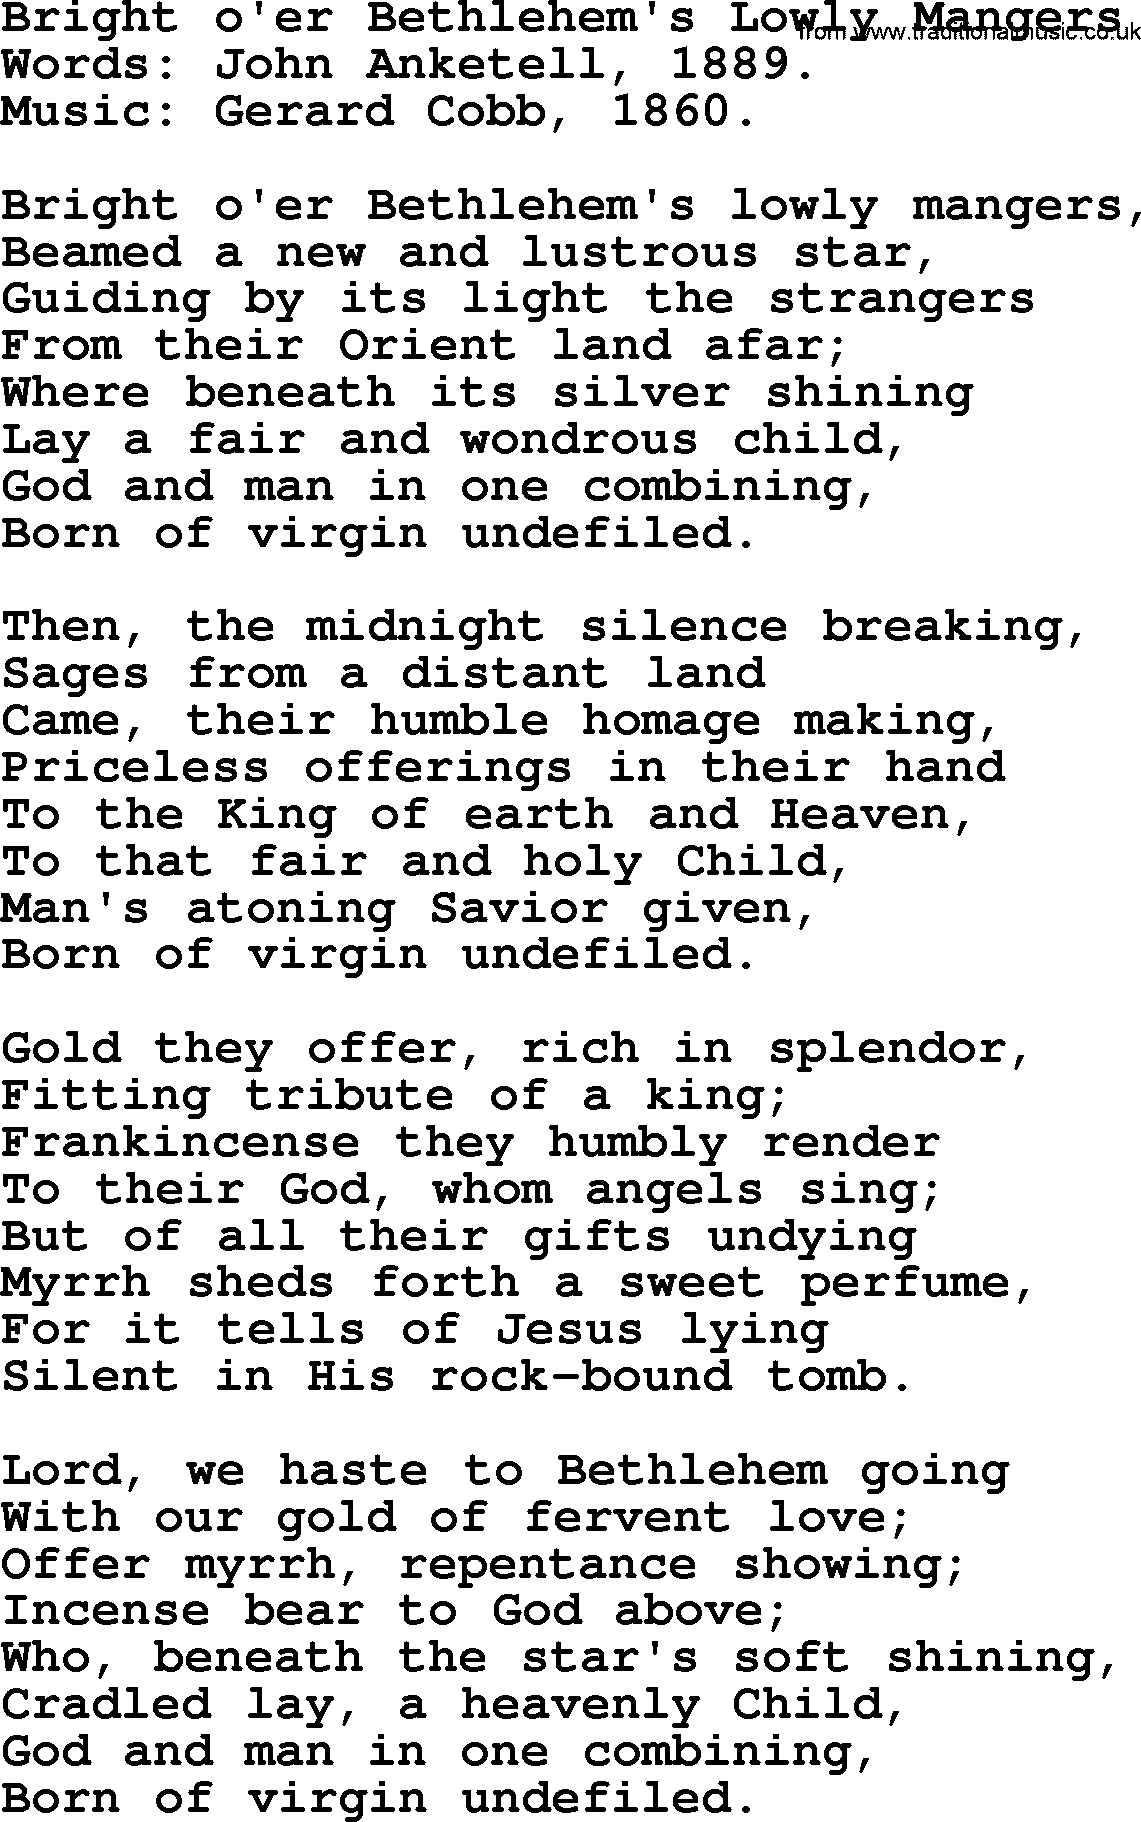 Christmas Hymns, Carols and Songs, title: Bright O'er Bethlehem's Lowly Mangers, lyrics with PDF